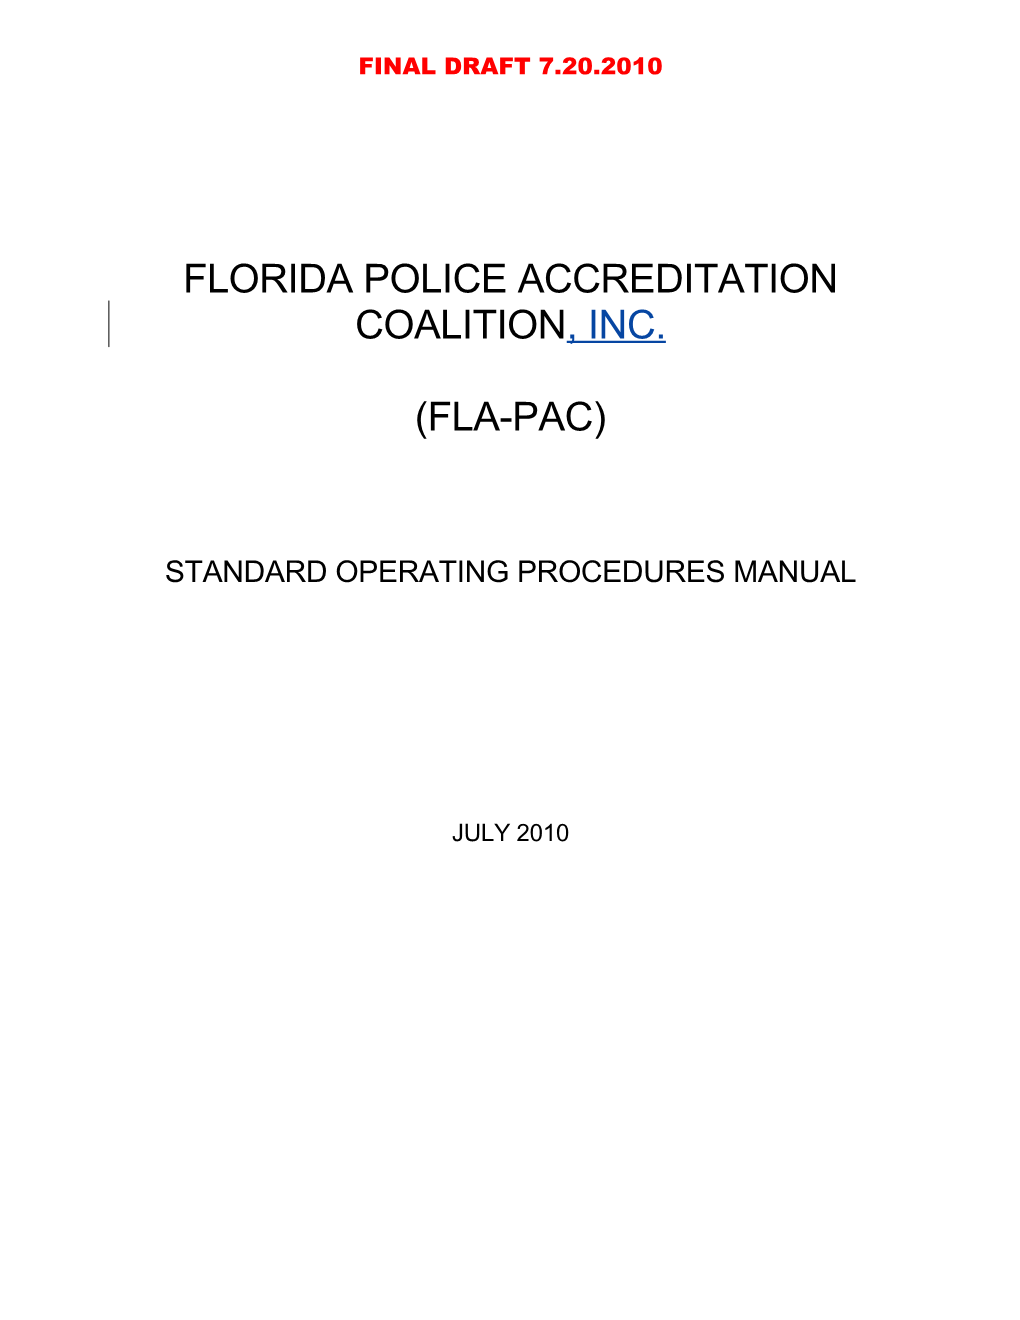 Florida Police Accreditation